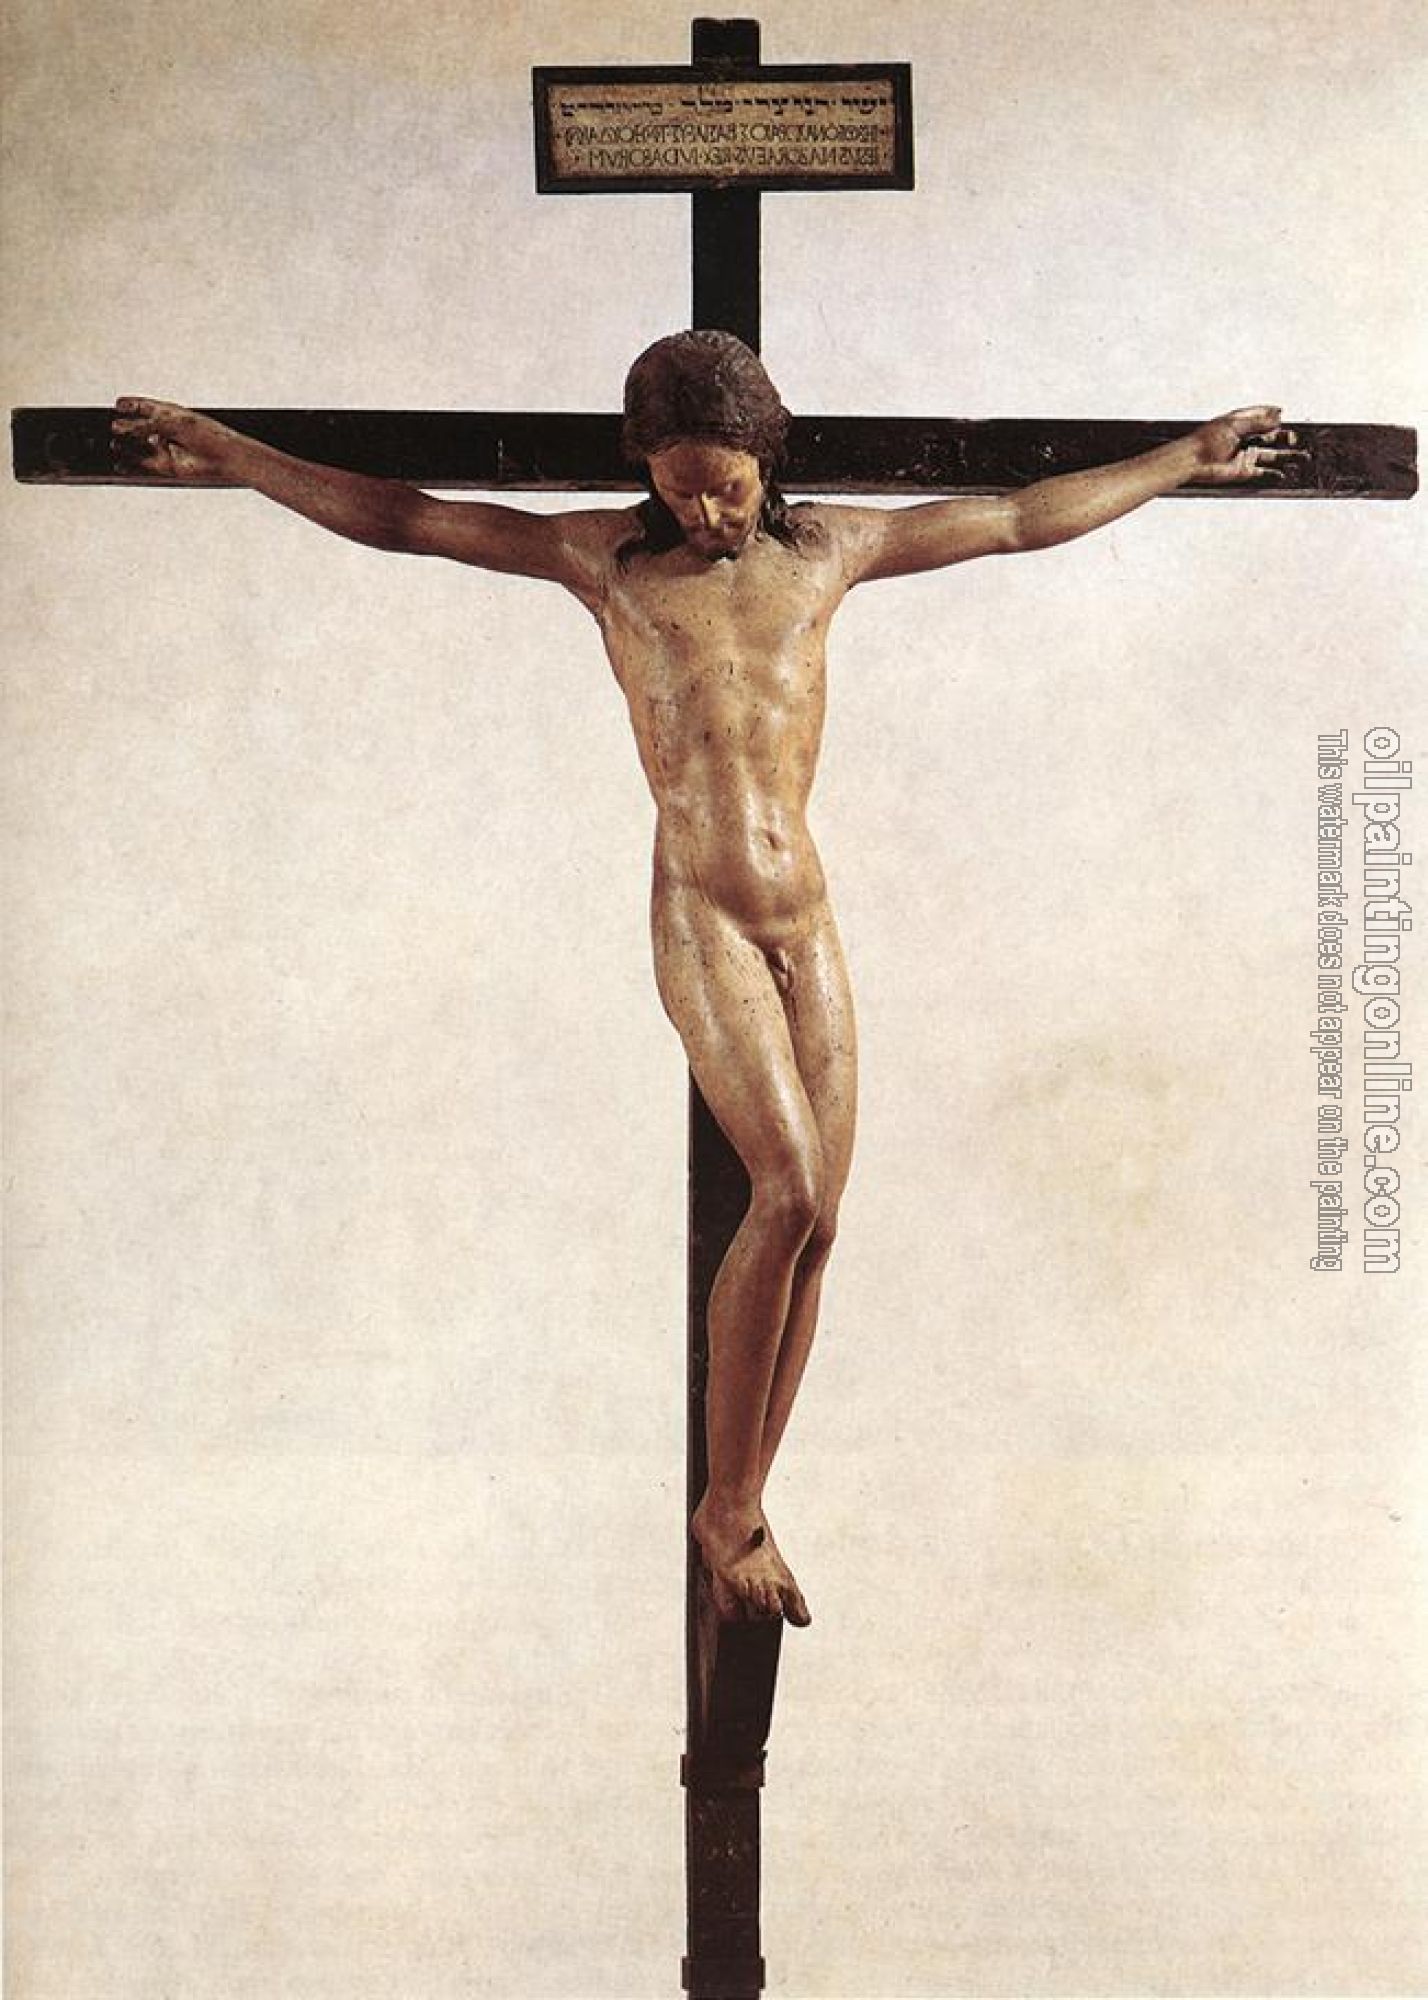 Michelangelo - Crucifix